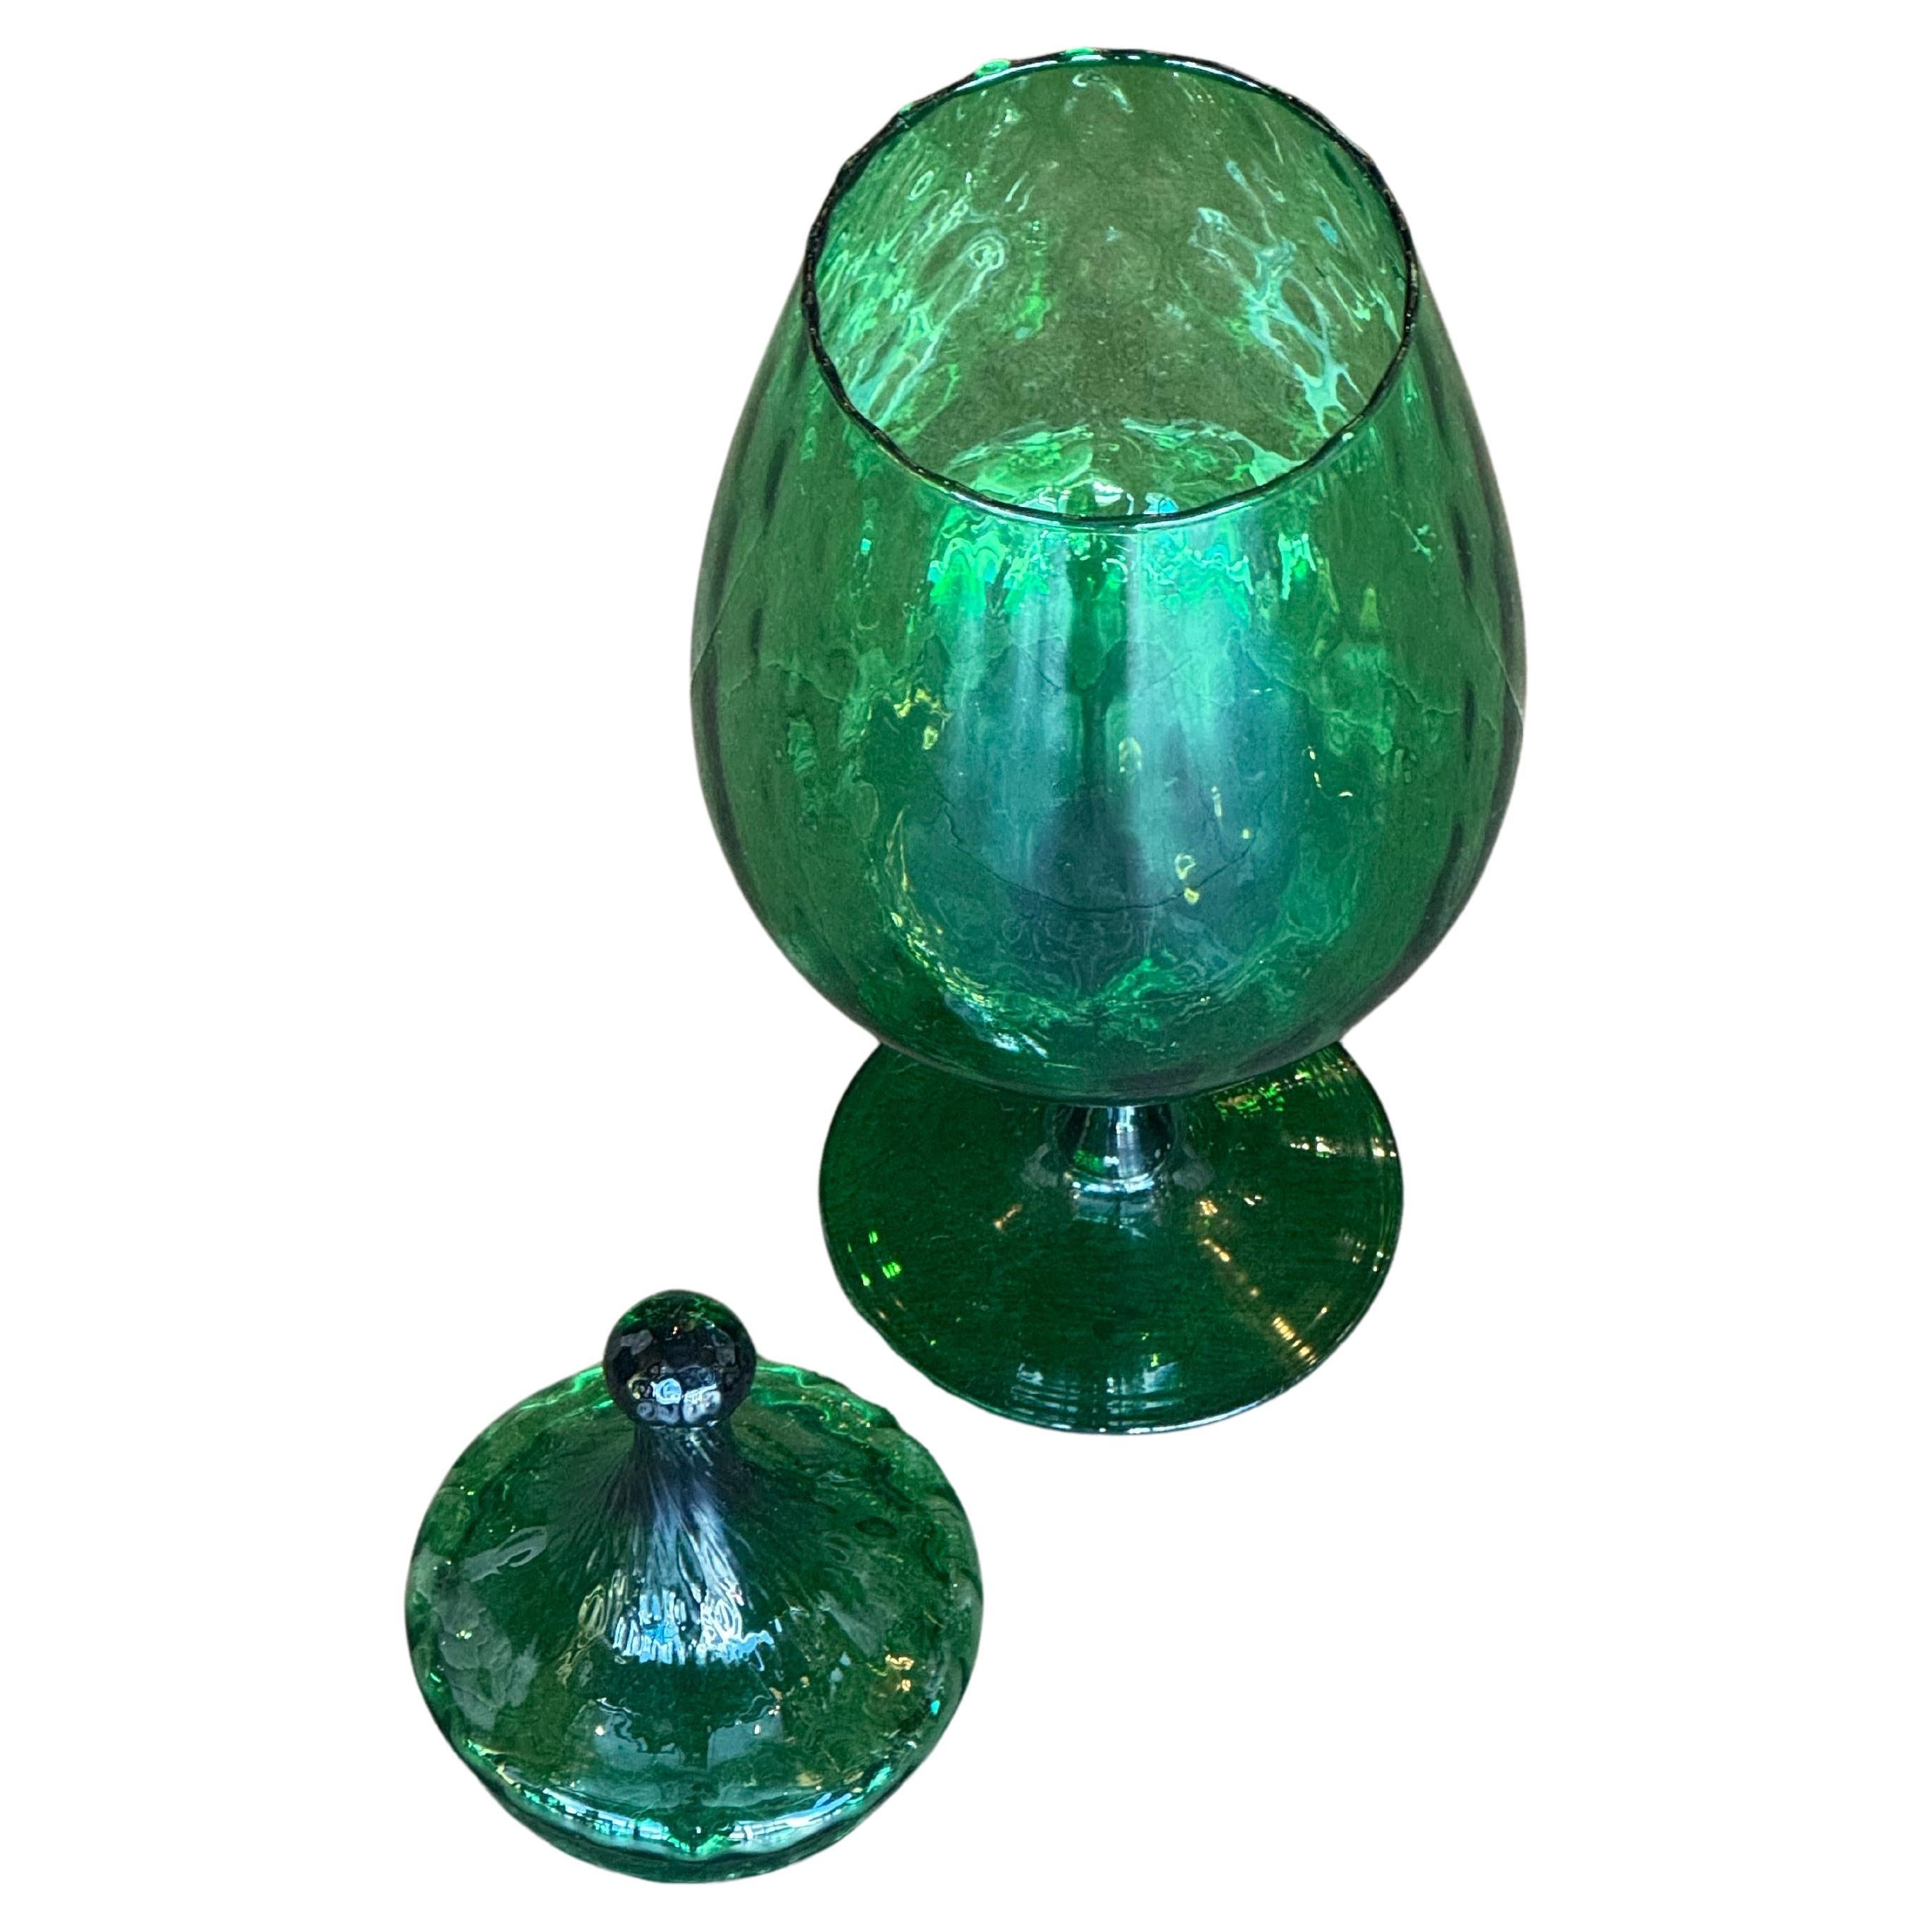 Hand-Blown Emerald Green Glass Lidded Pedestal
Sourced from Morrocco by Martyn Lawrence Bullard



